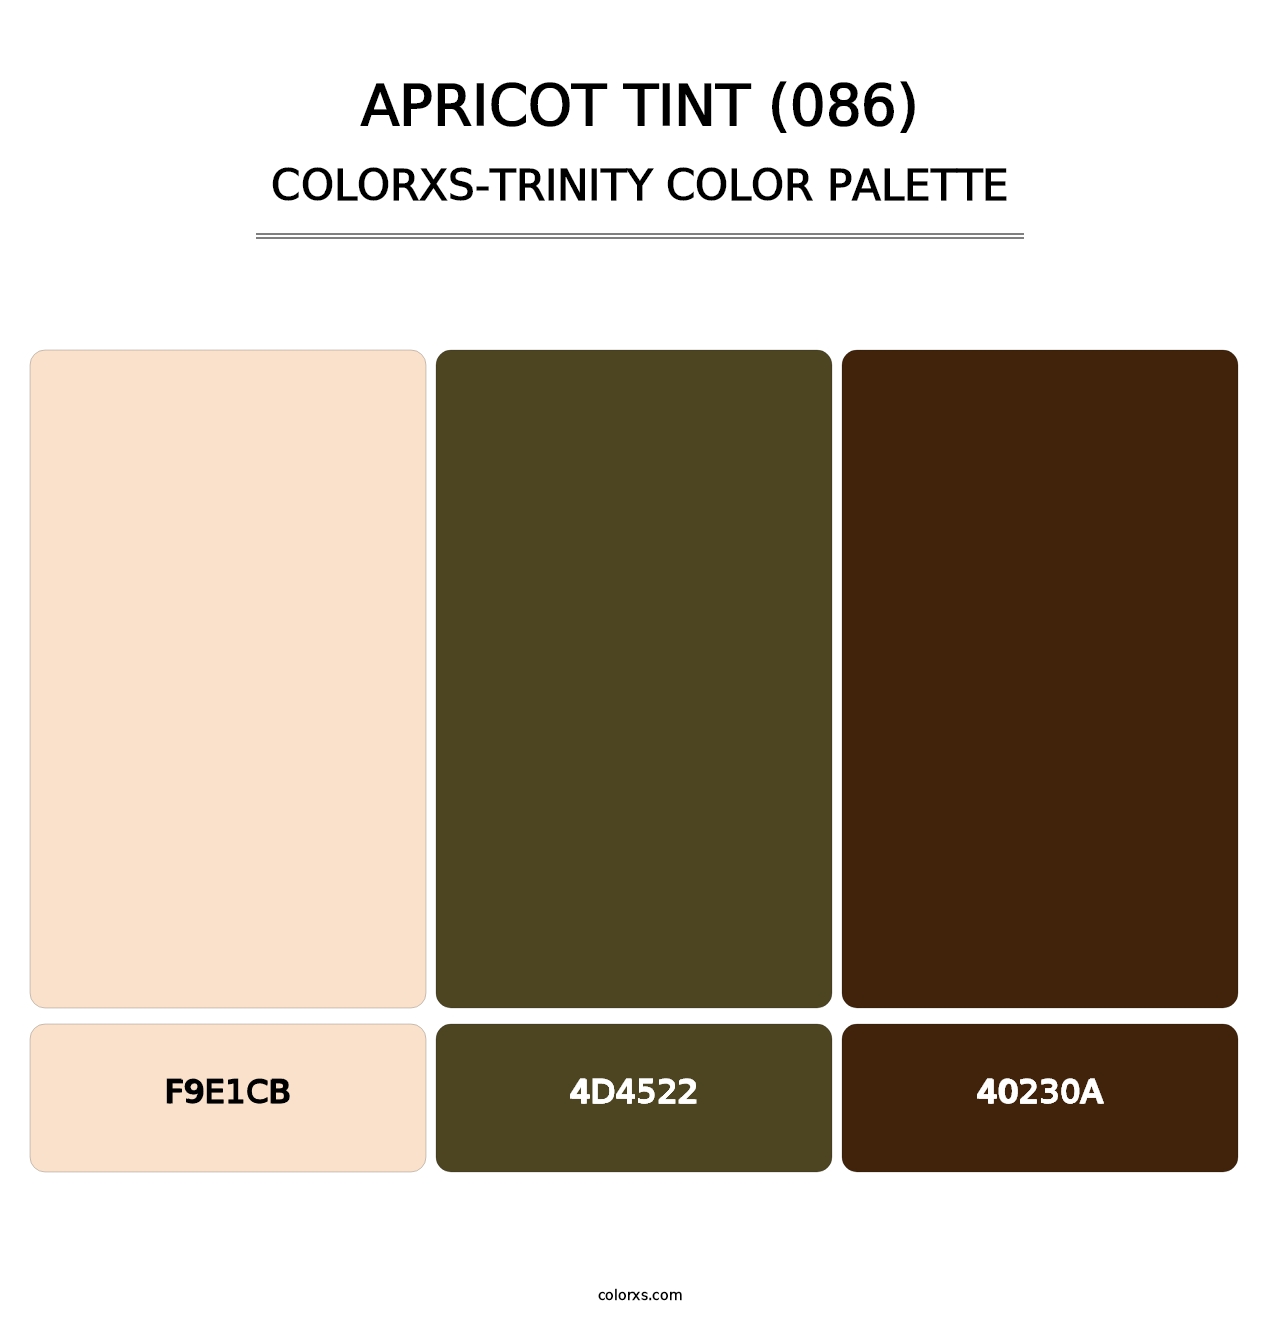 Apricot Tint (086) - Colorxs Trinity Palette